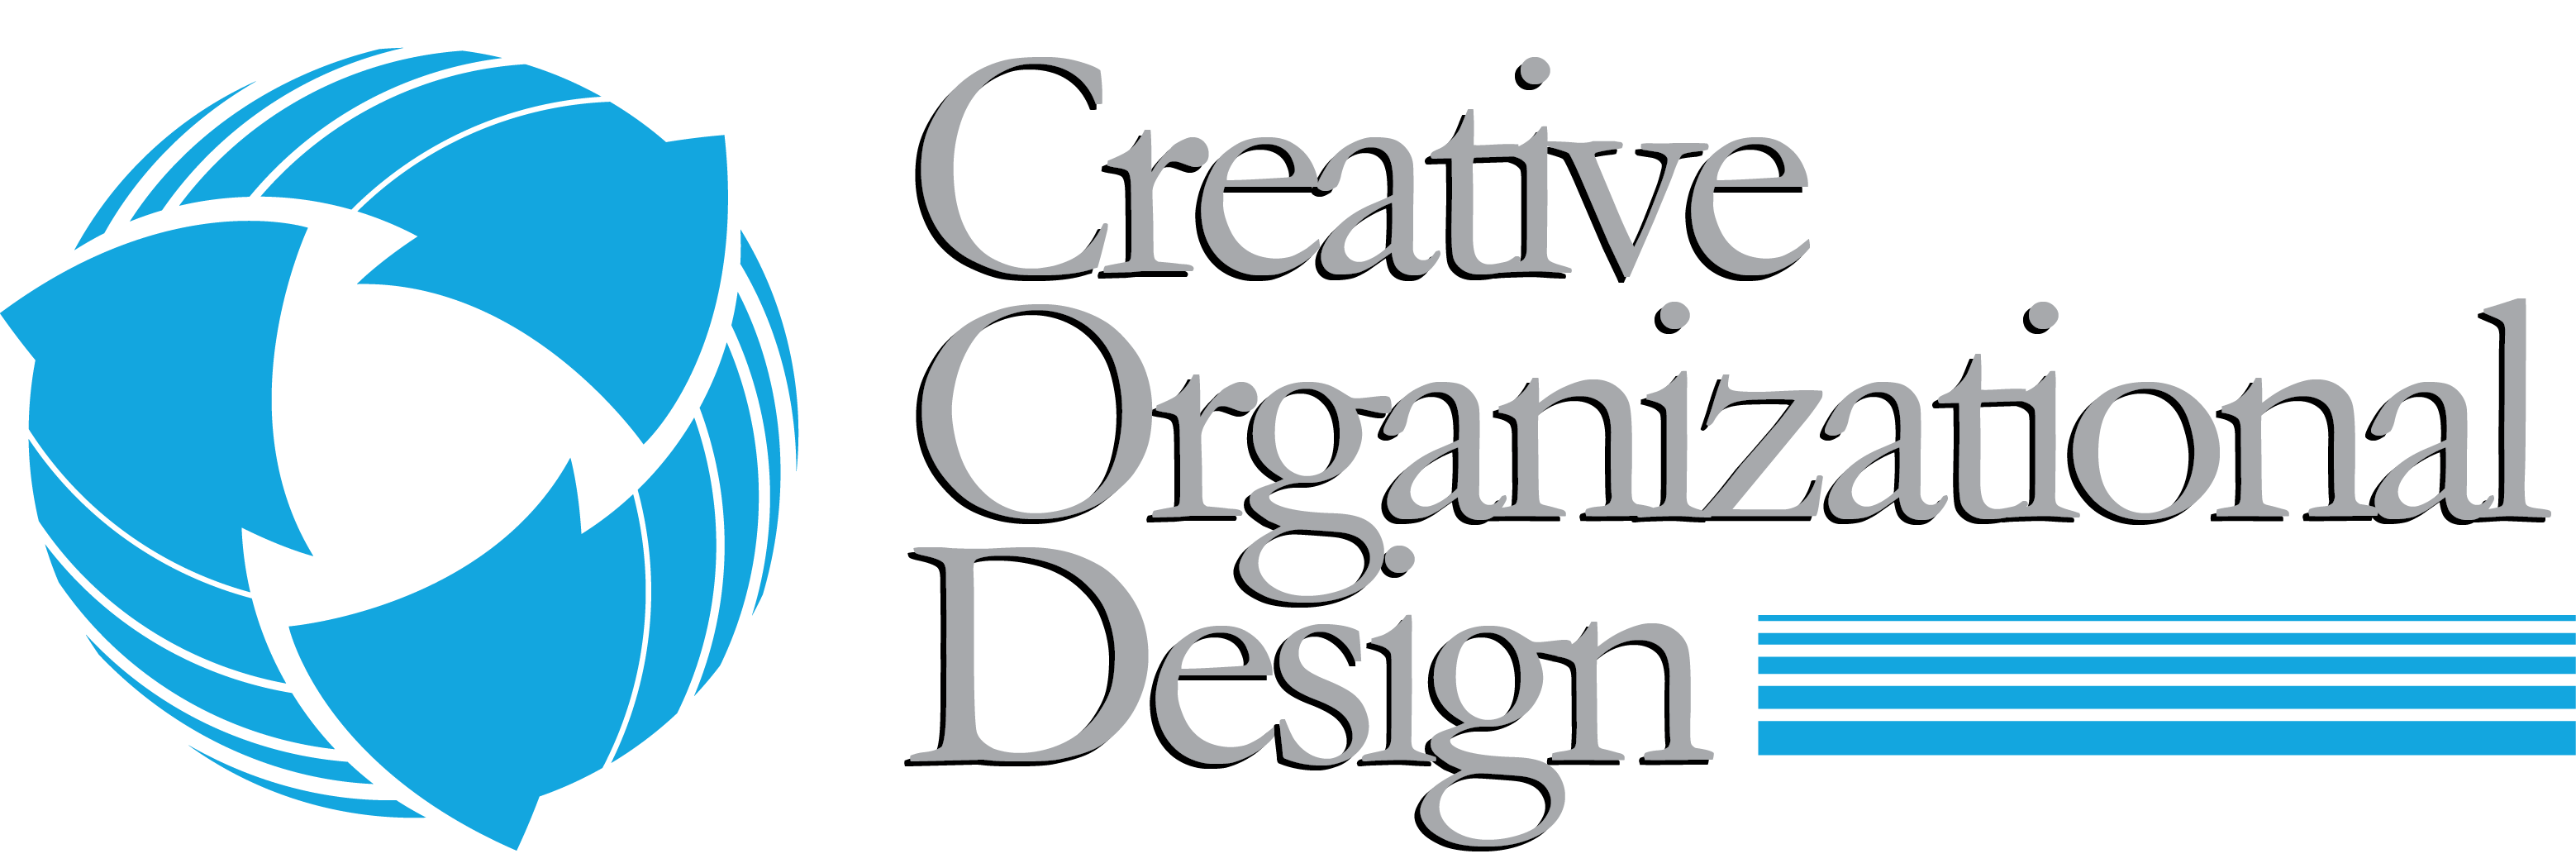 Creative Organizational Design